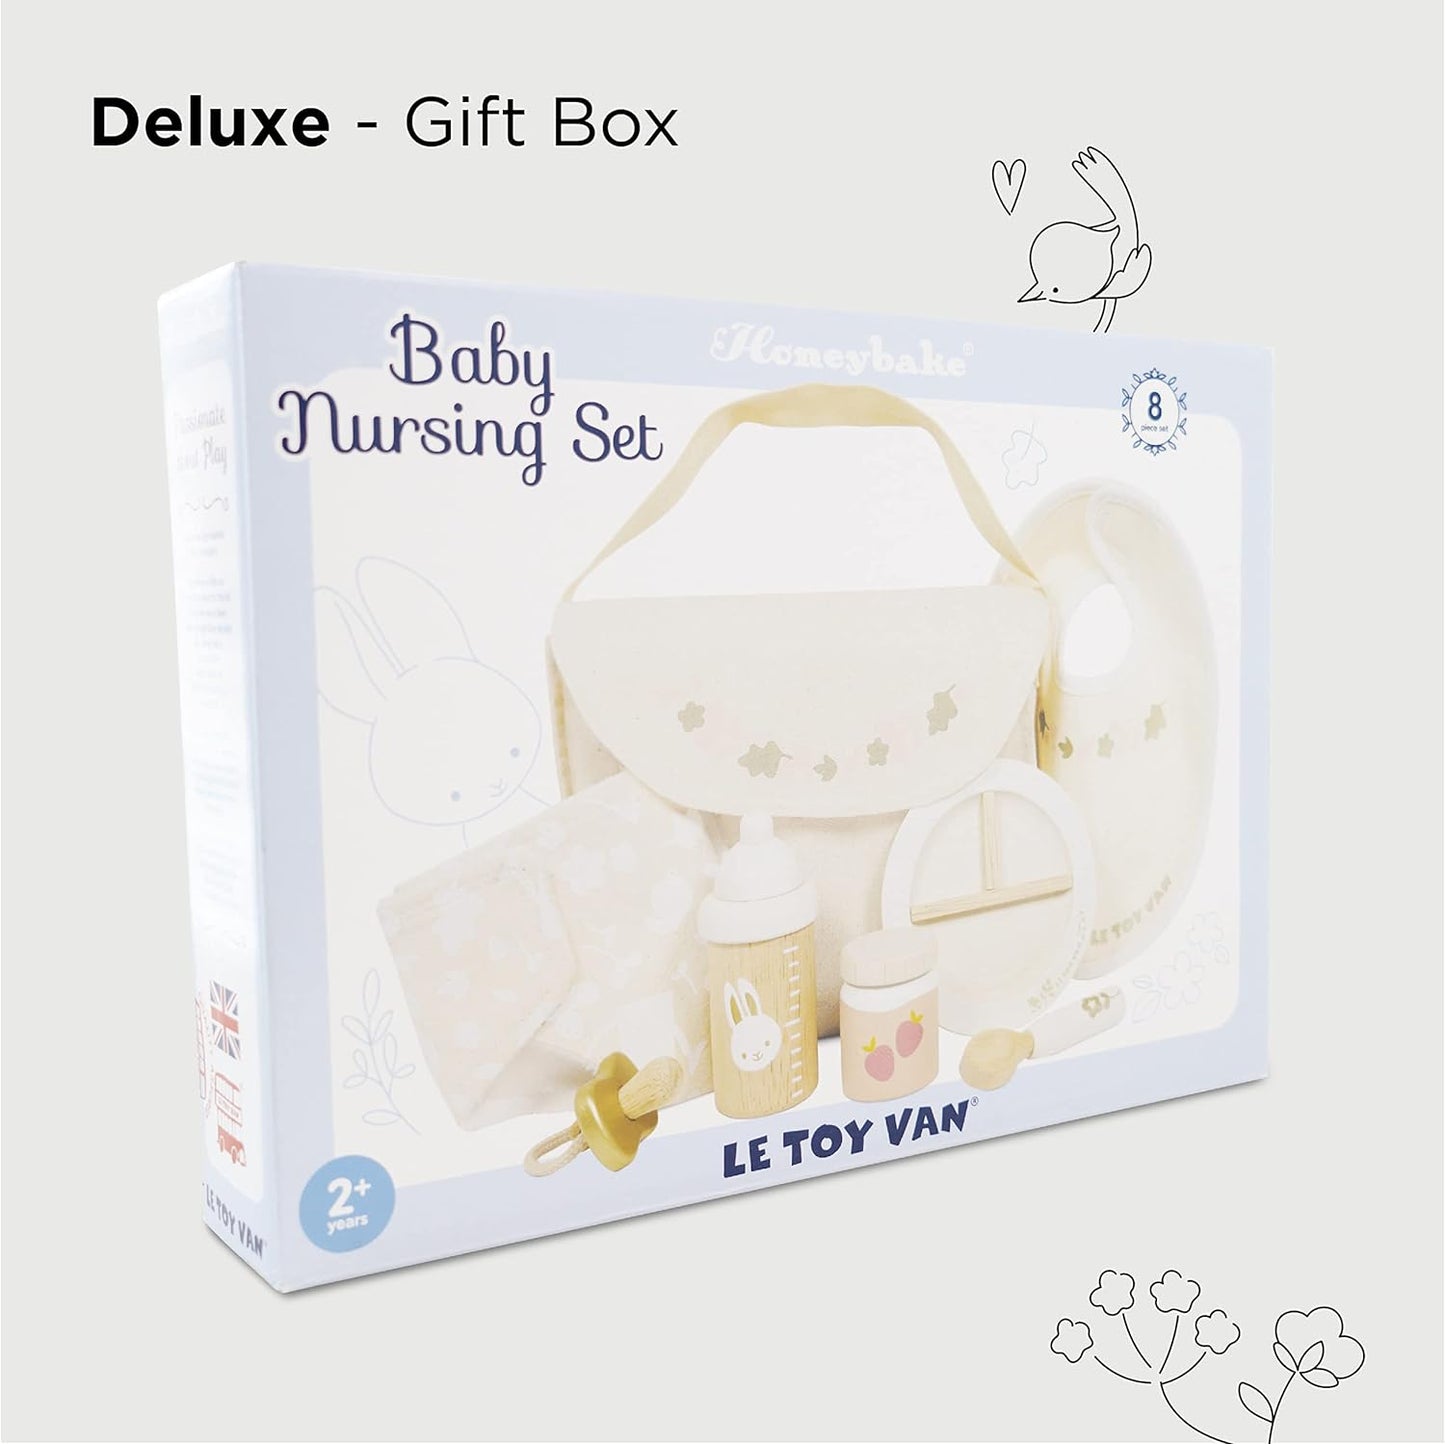 Le Toy Van - Conjunto de enfermagem para bonecas - Brinquedos para crianças - Presentes para bebês - Conjunto de presentes para meninas - Presente para meninos - Brinquedos para meninos e meninas a partir de 2 anos